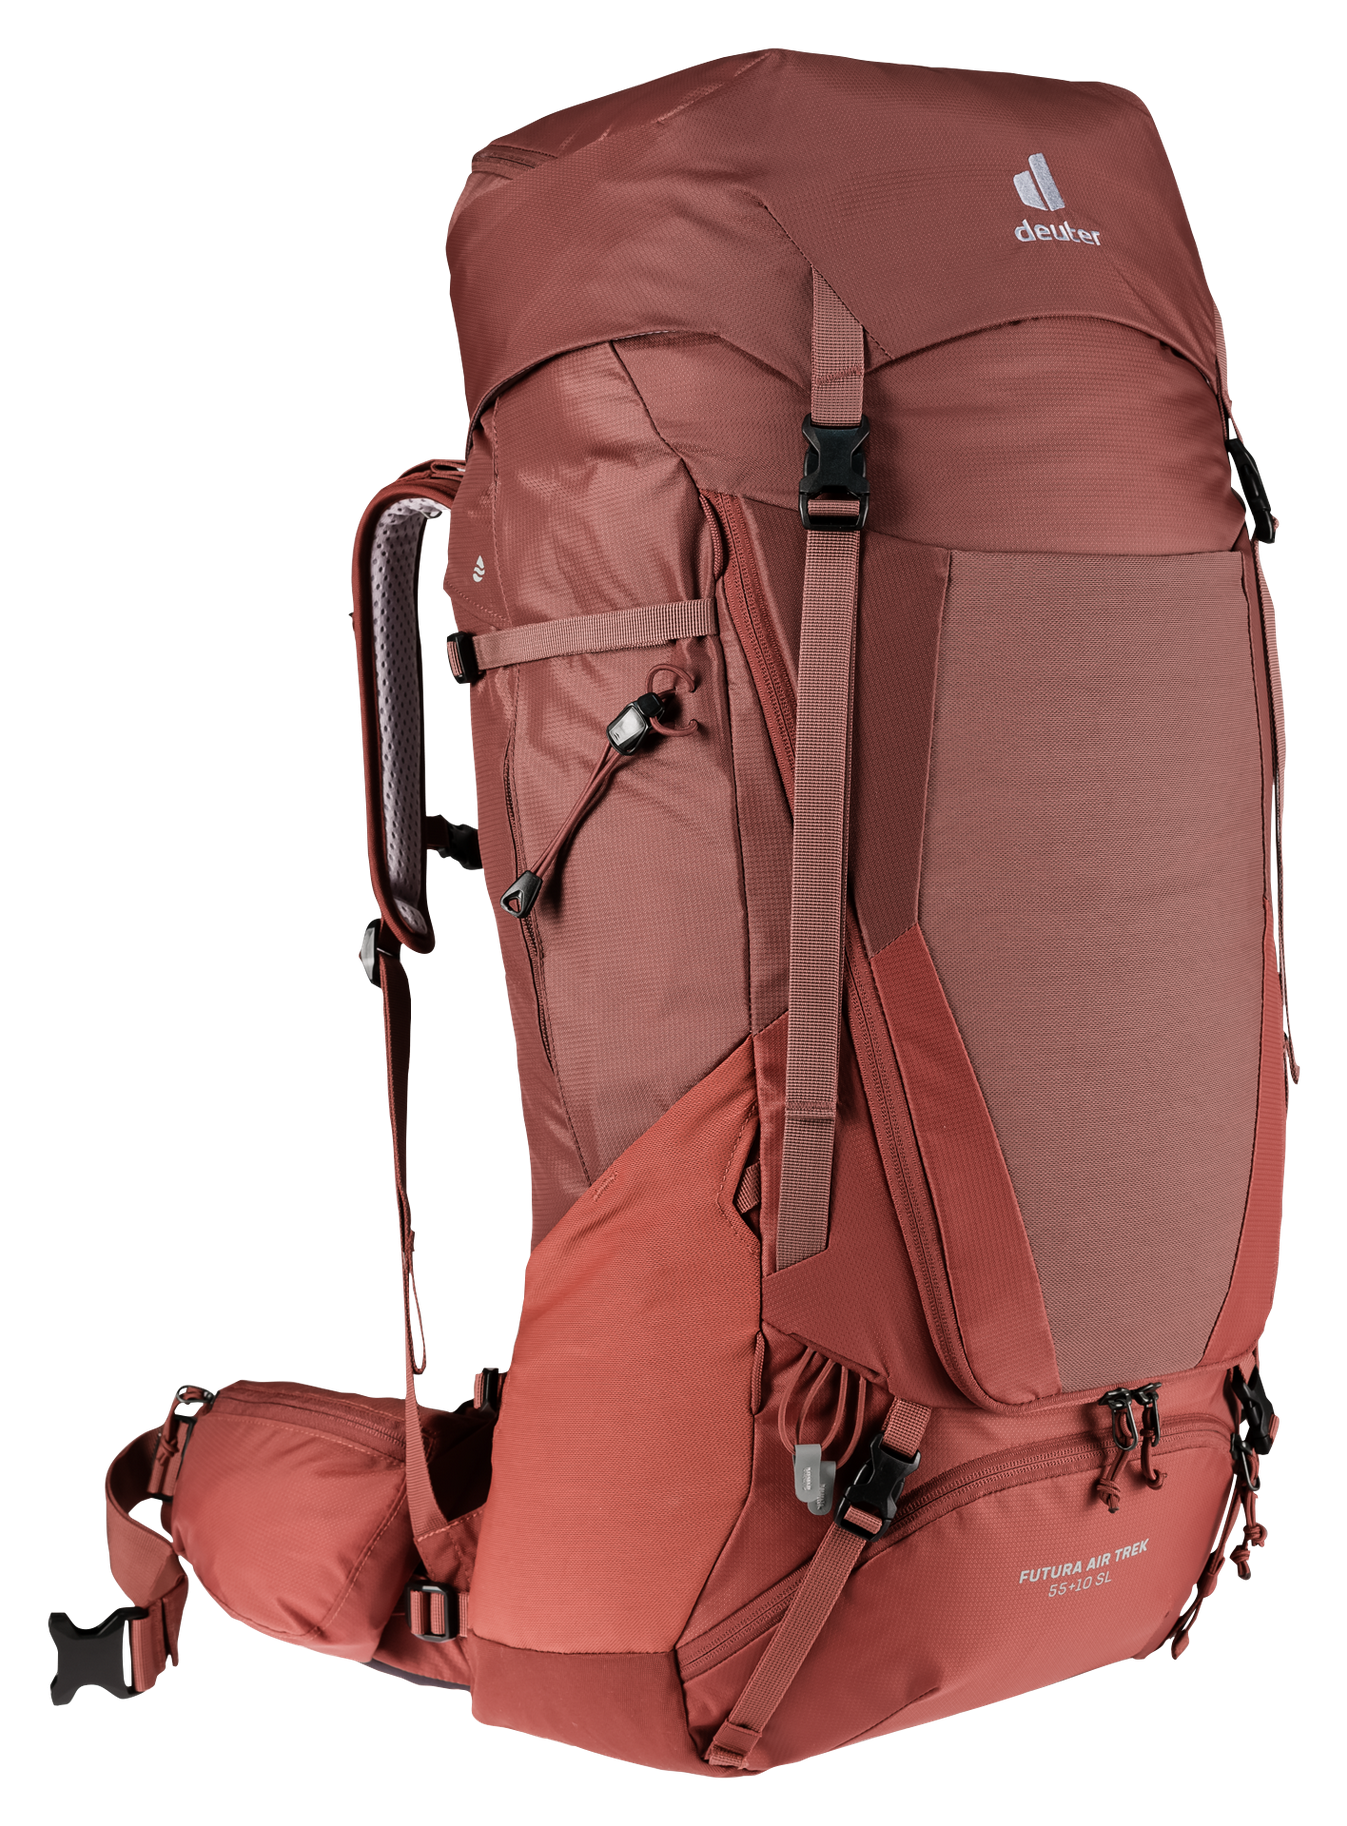 Deuter Futura Air Trek 55 + 10 SL Backpack Redwood/Lava - The BackCountry